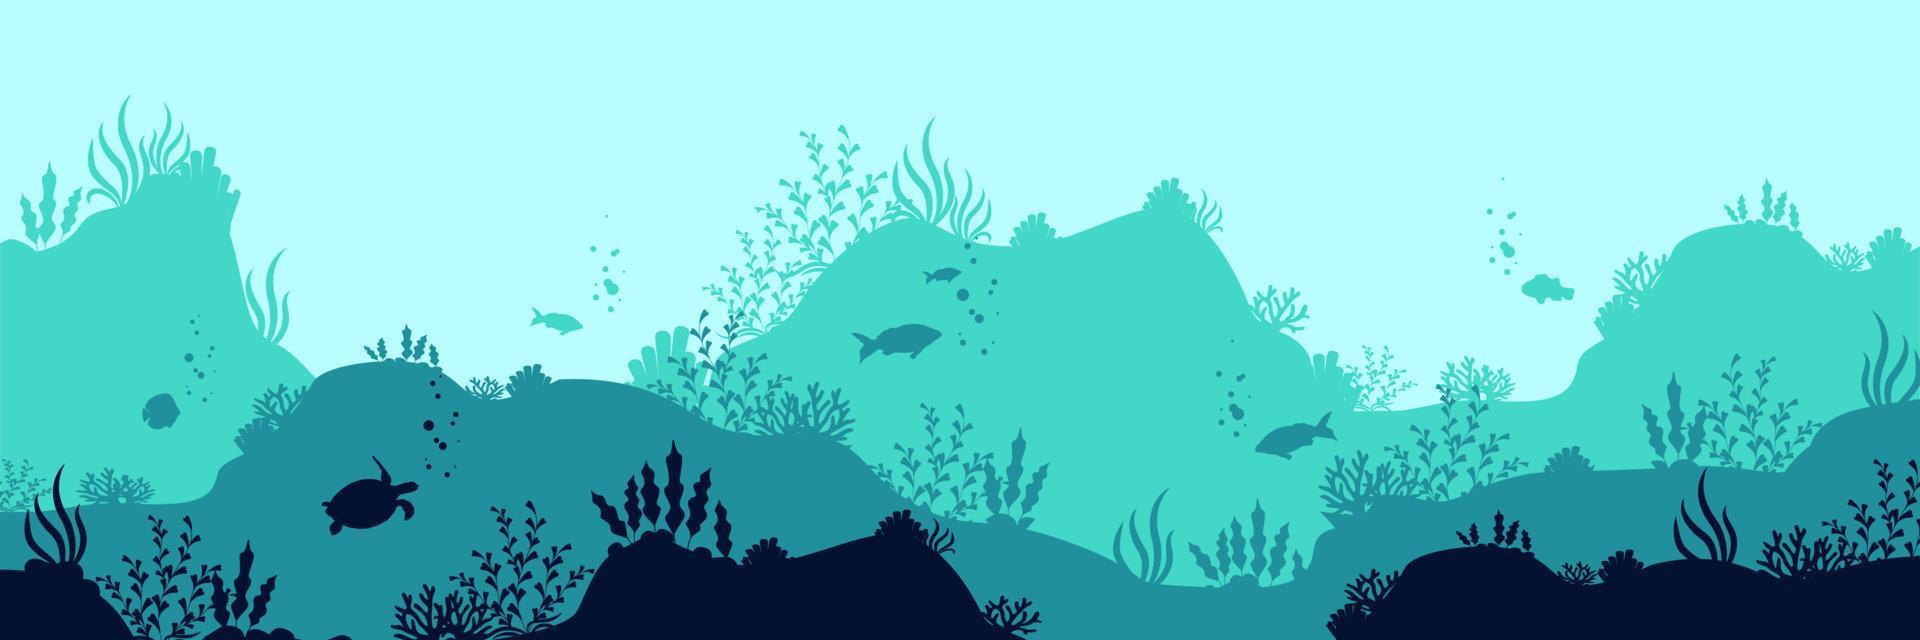 fondo oceánico del mundo profundo. siluetas submarinas oscuras nadando peces marinos con contornos azules corales. vector